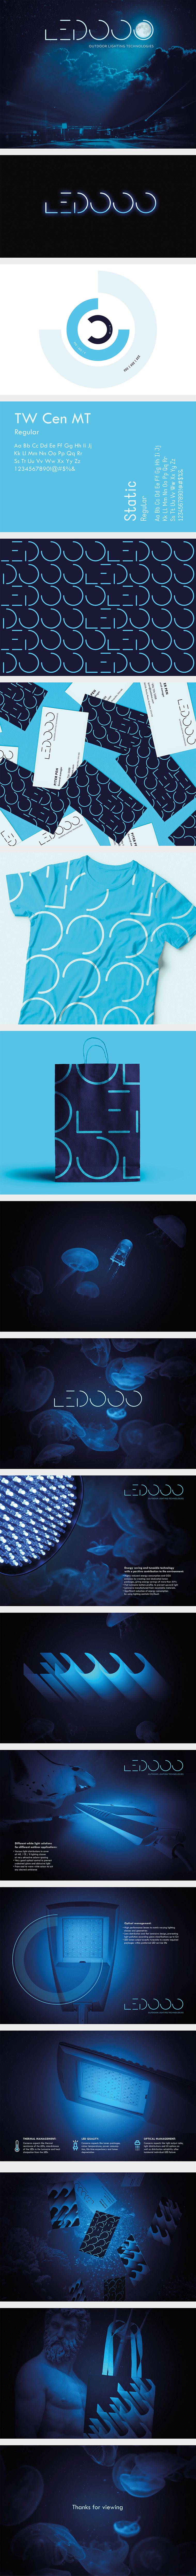 led Lamp jellyfish stingray underwater night light moon medusa Technology identity Outdoor naming pattern